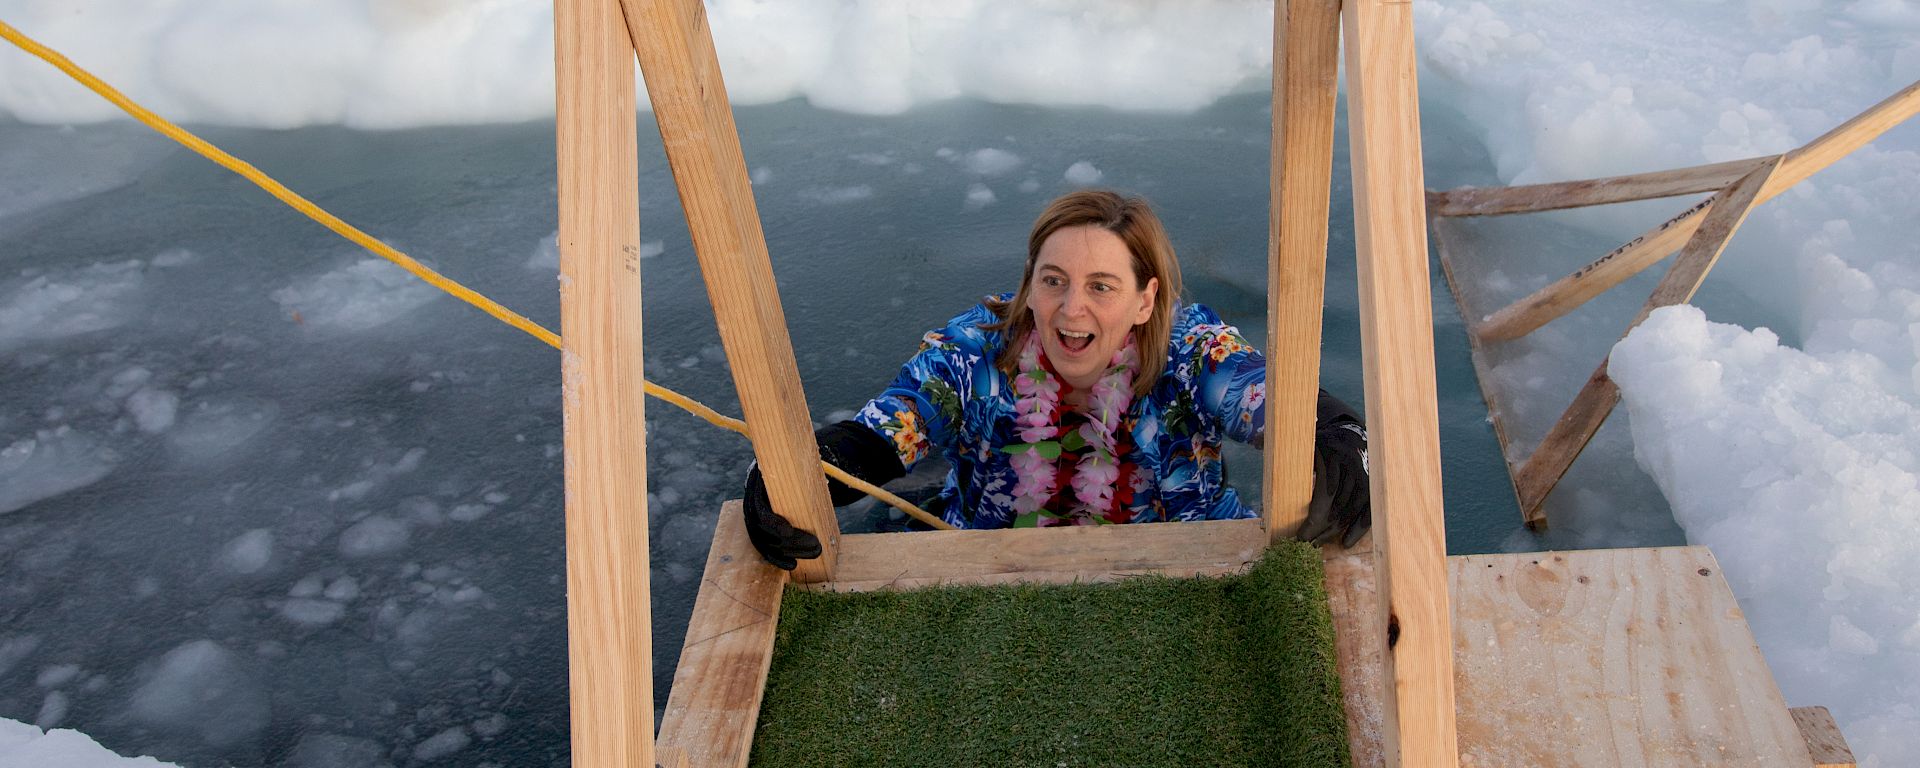 A woman in a Hawaiian shirt climbs out of an ice hole